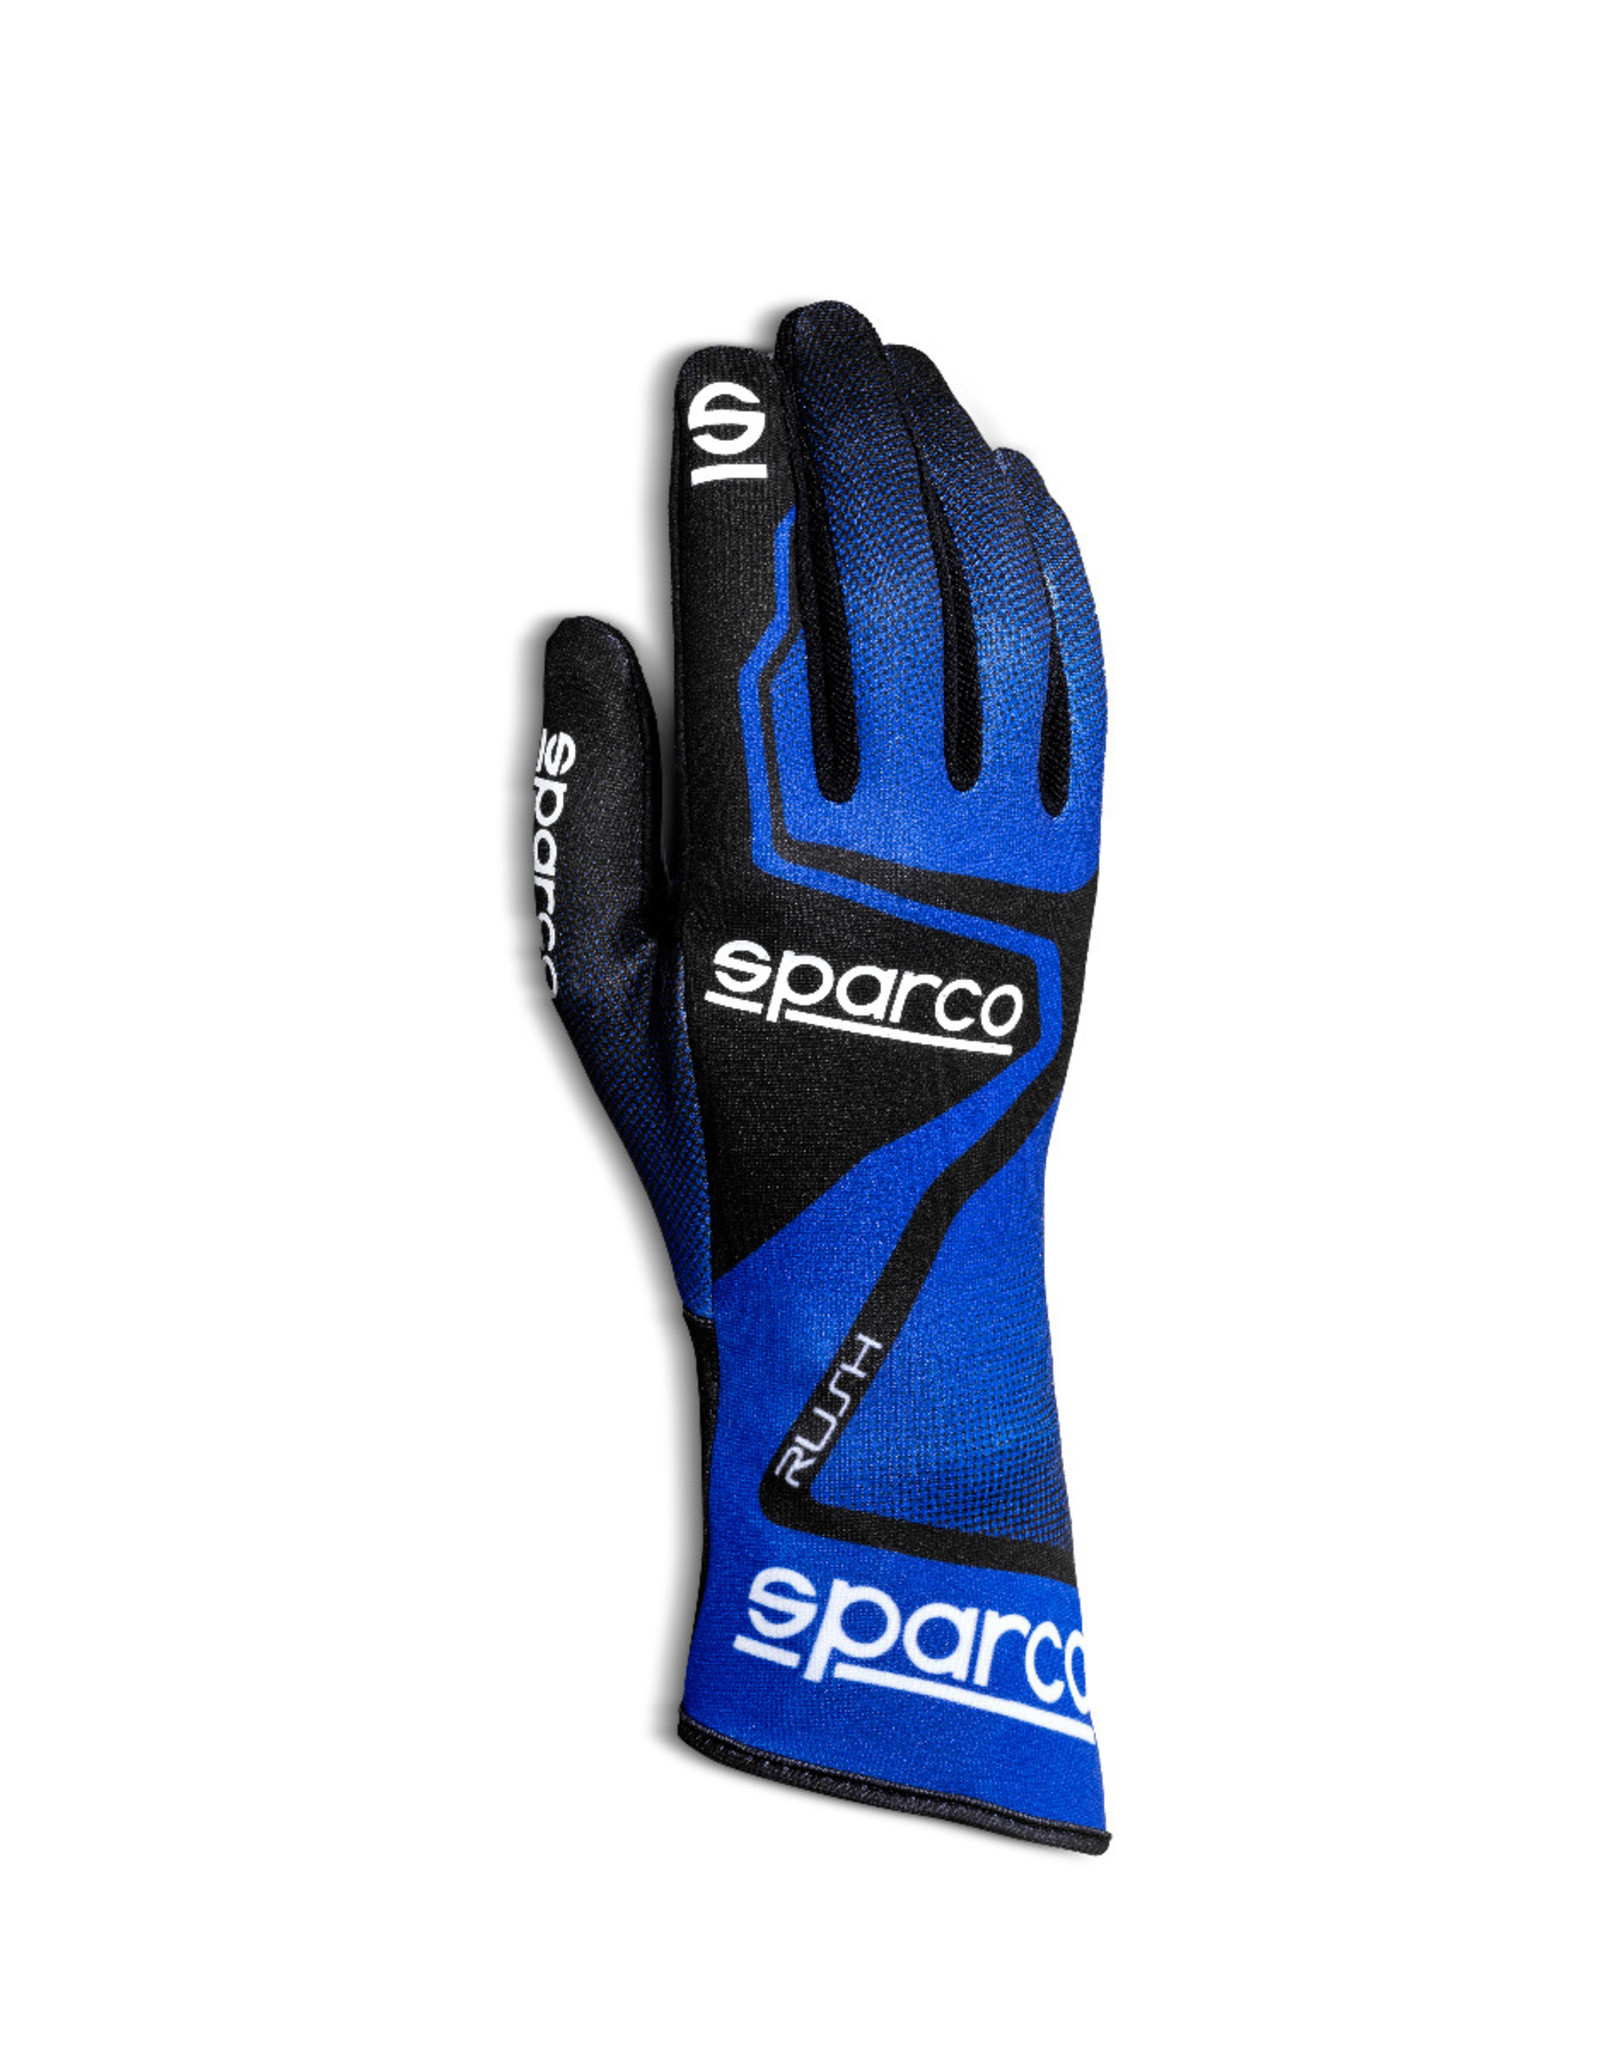 Sparco Sparco Rush kart gloves Blue / Black